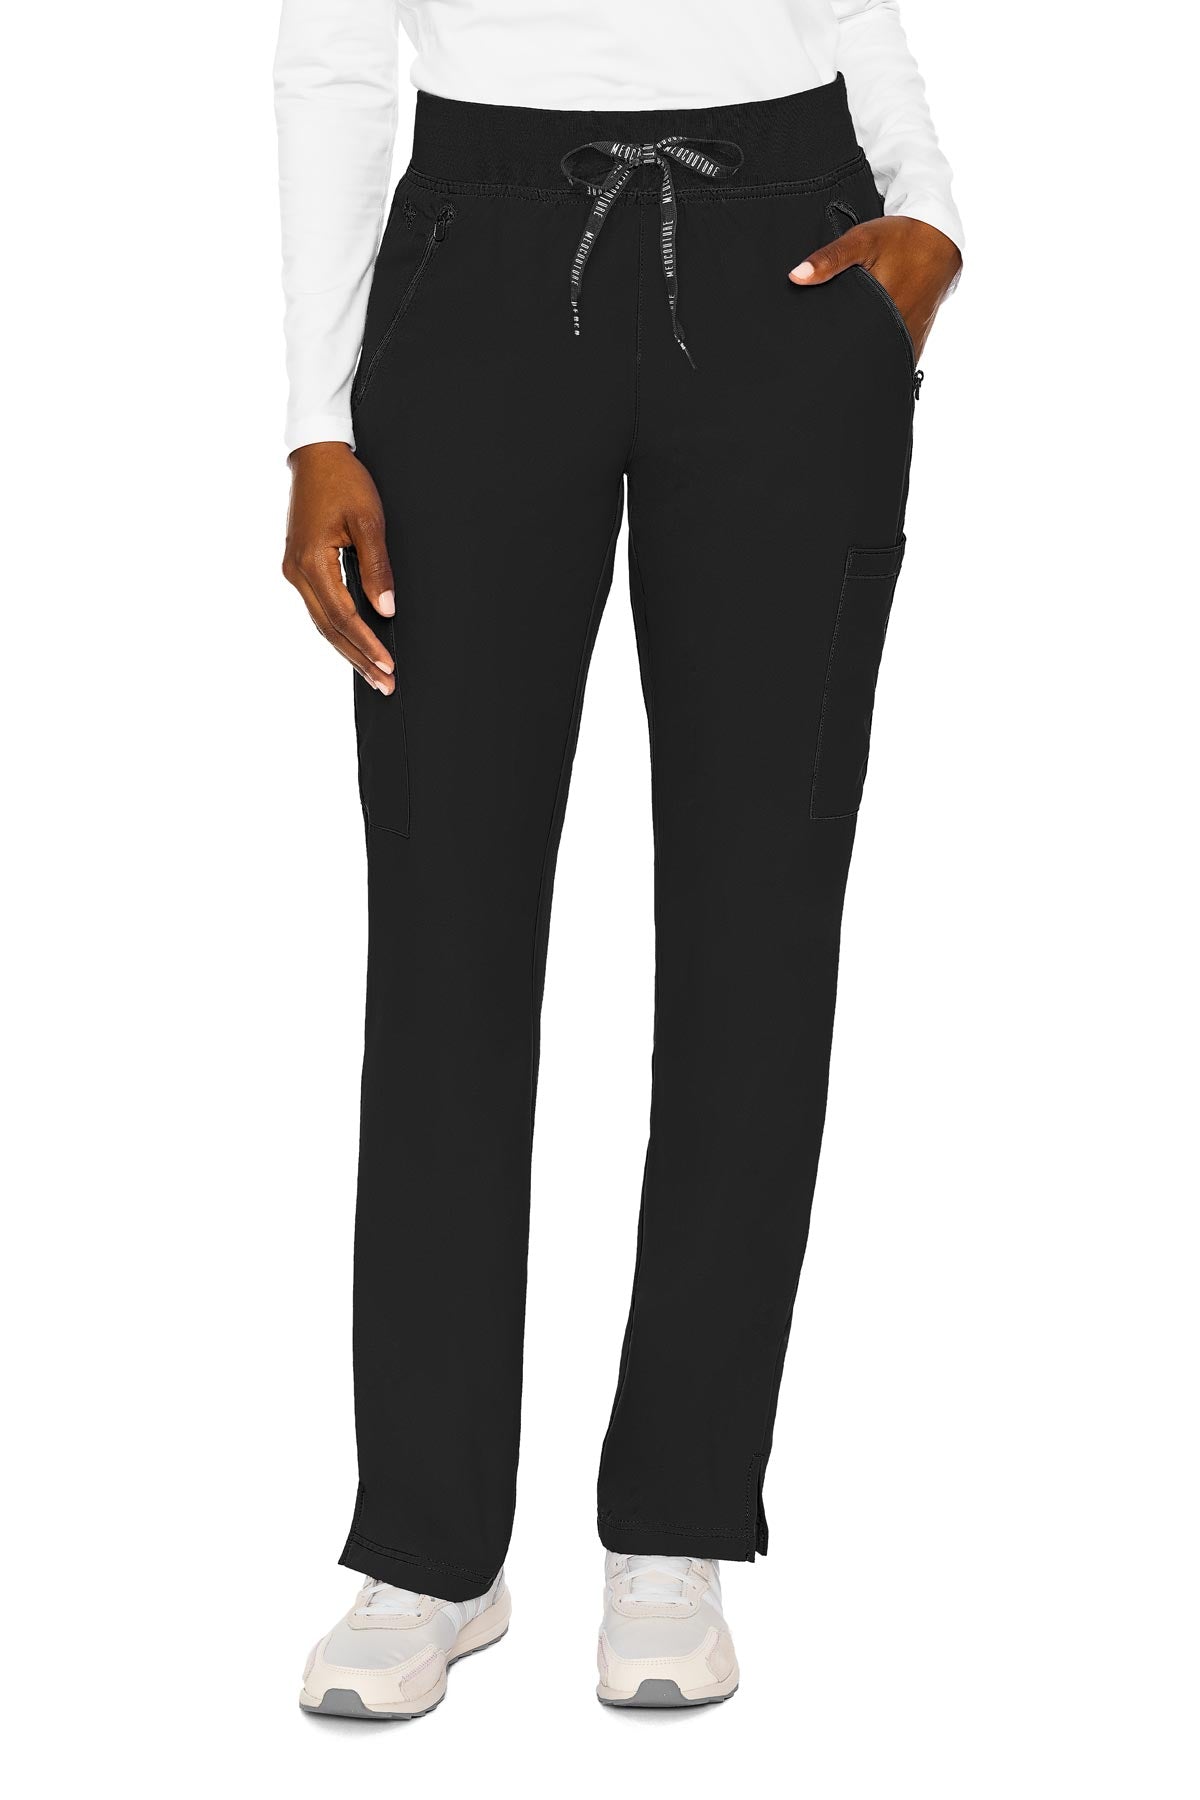 2702 Med Couture Insight Women's Zipper Pant – The Uniform Shoppe